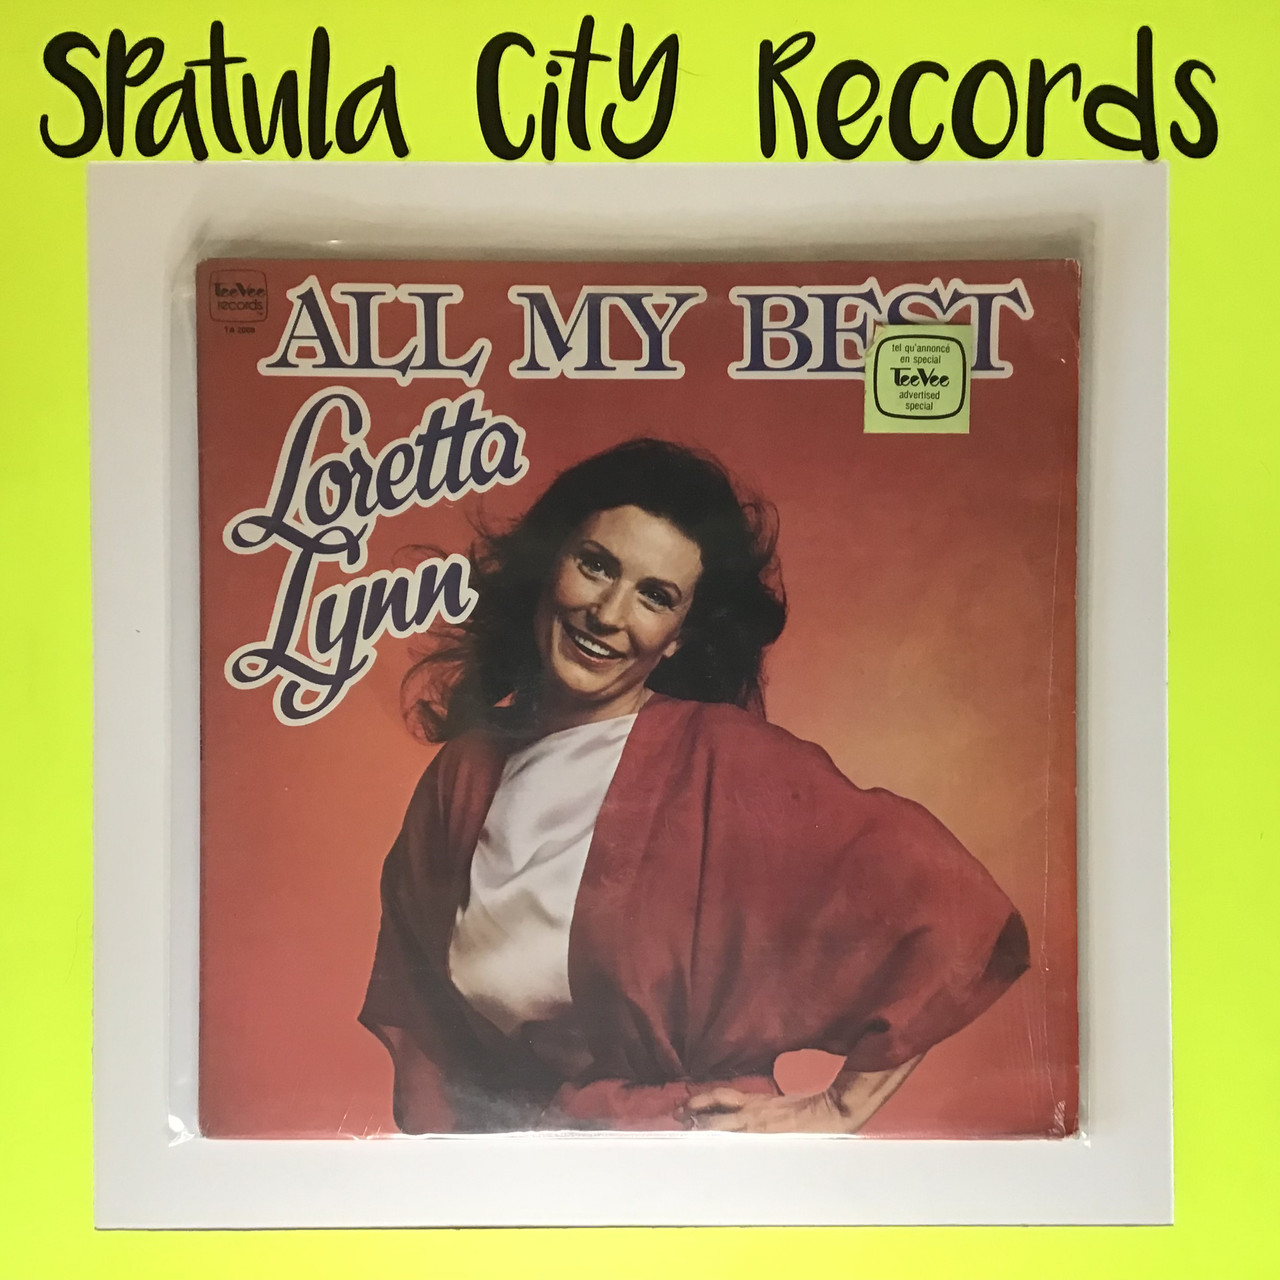 Loretta Lynn - All My Best - Canadian Import - vinyl record album LP